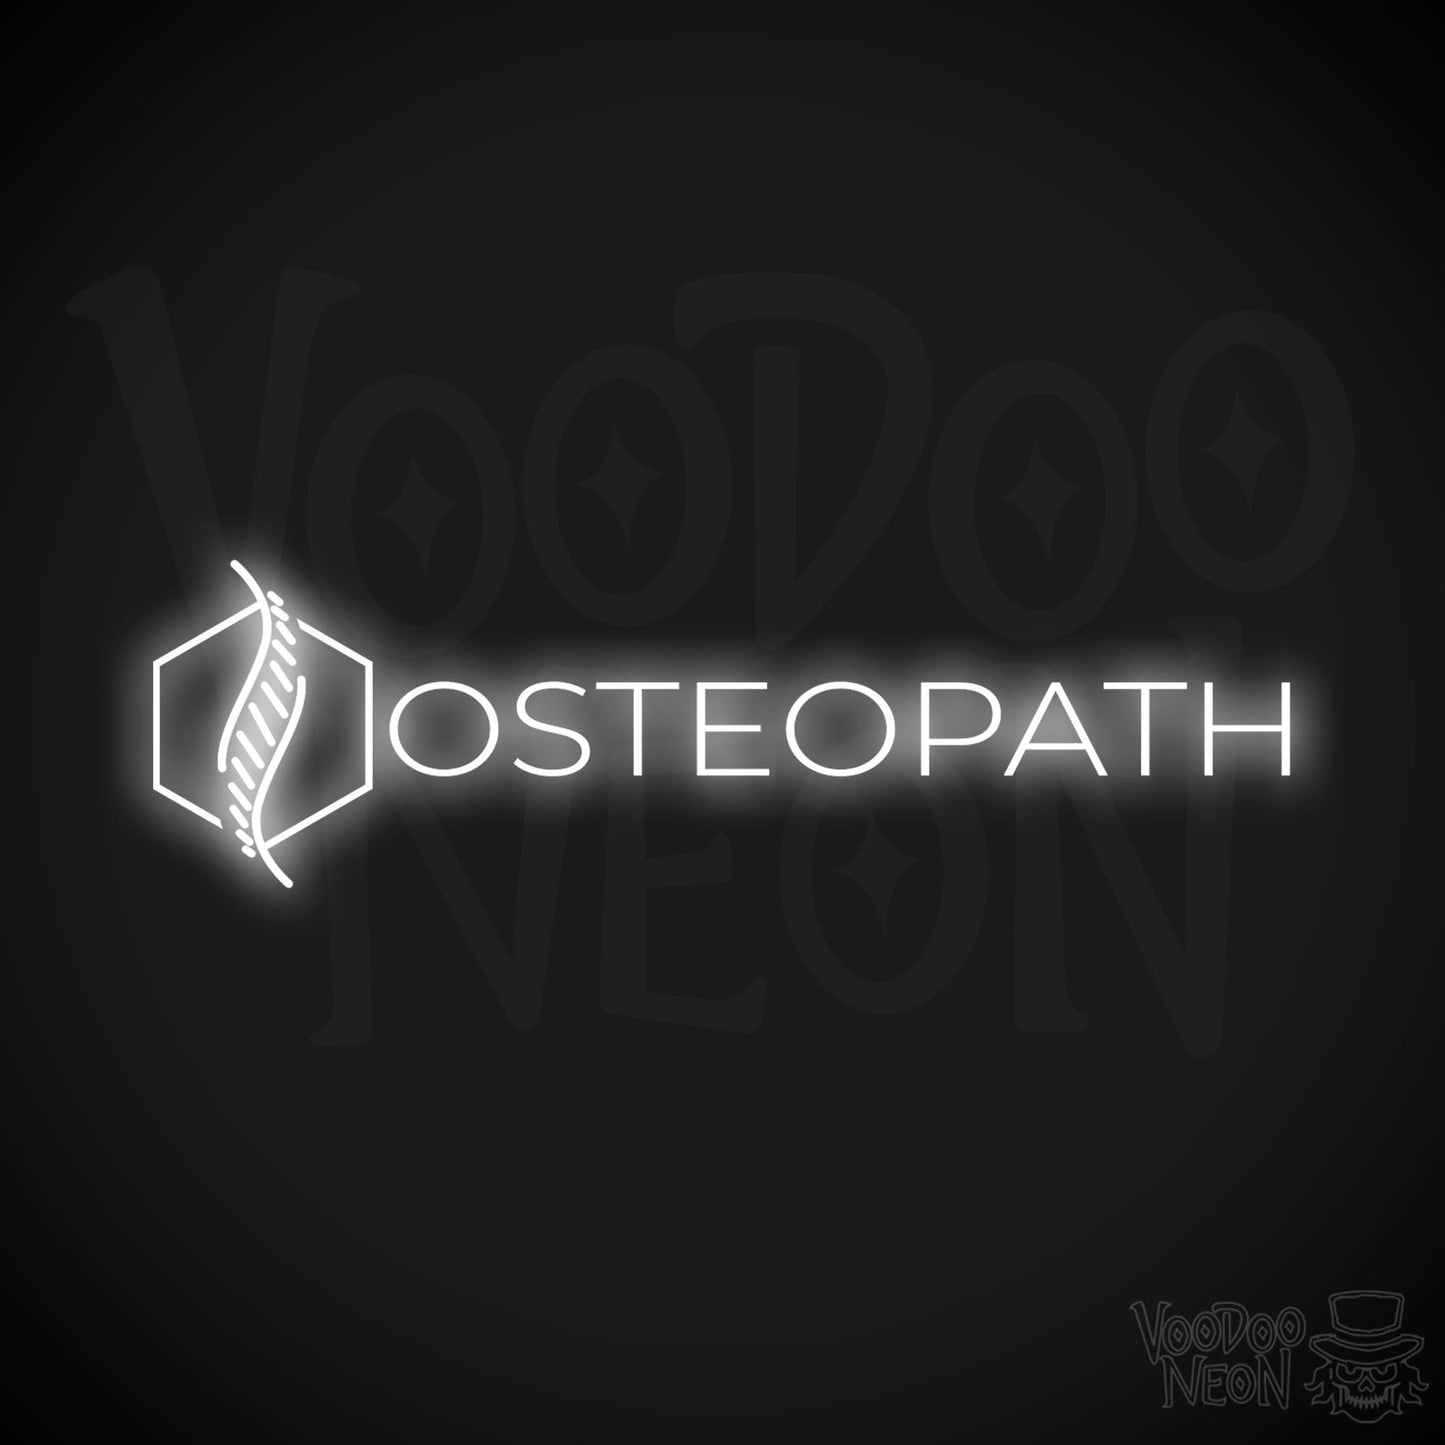 Osteopath LED Neon - White